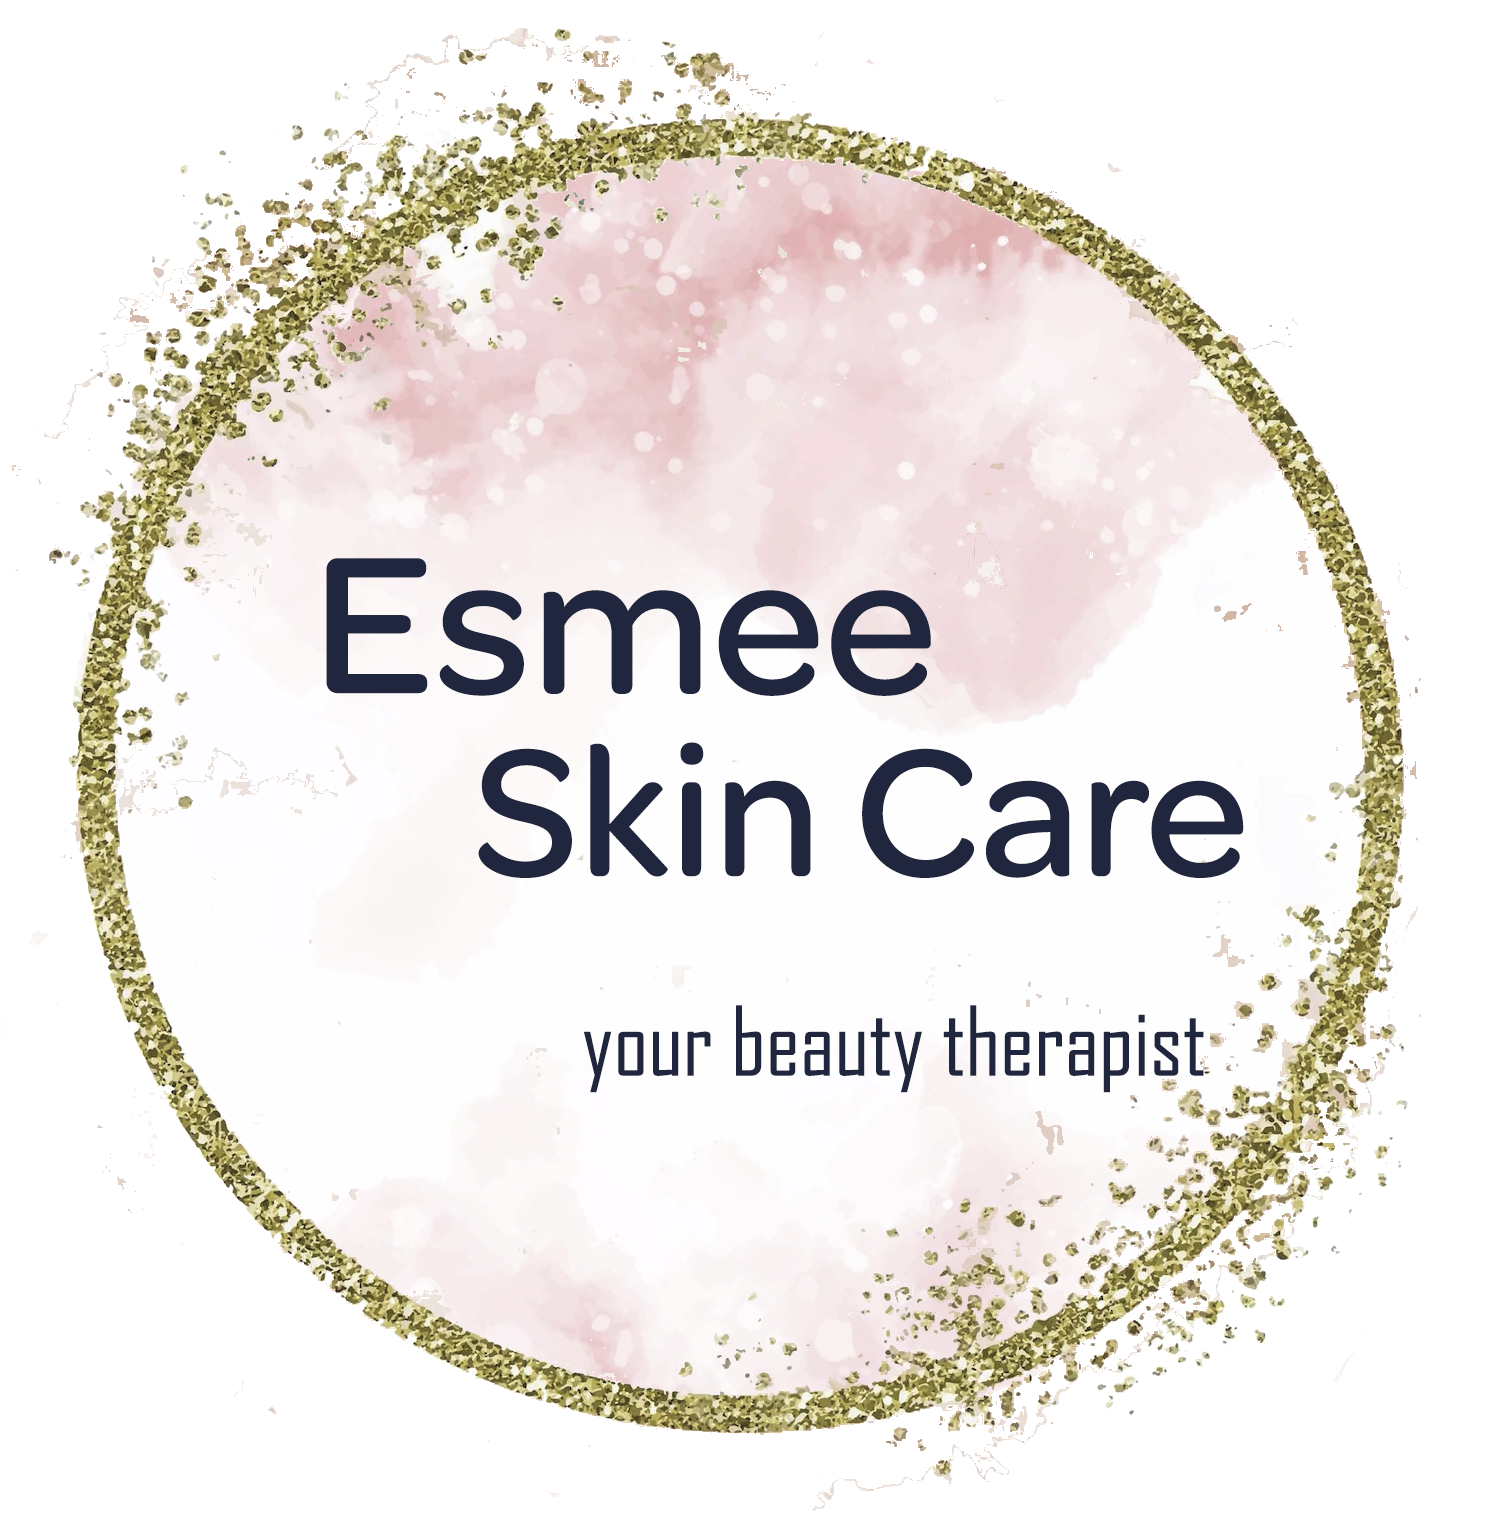 Esmee Skin Care